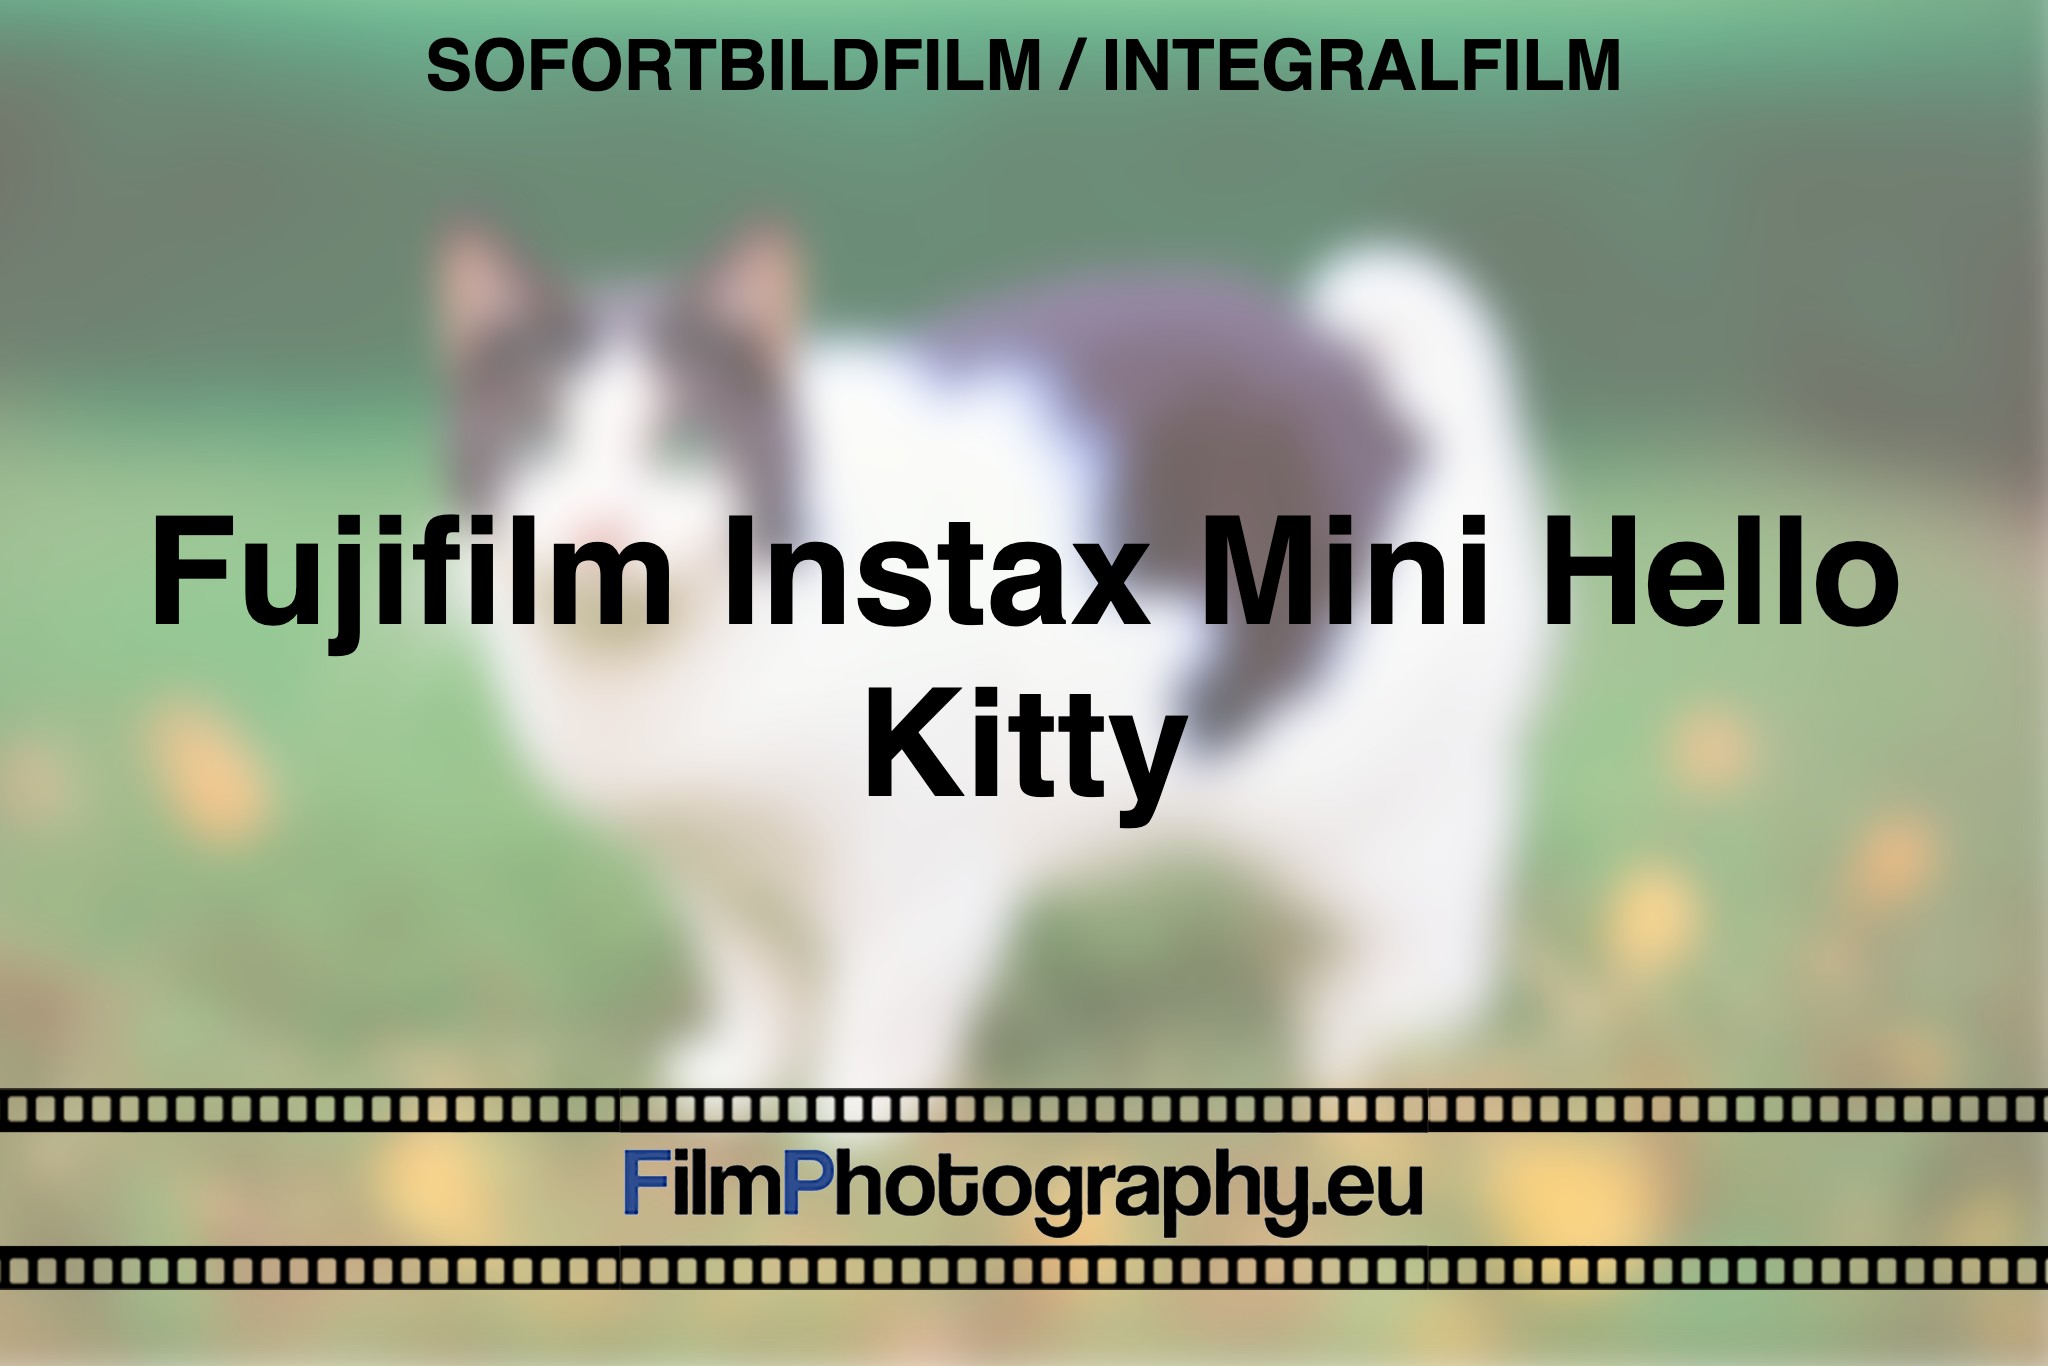 fujifilm-instax-mini-hello-kitty-sofortbildfilm-integralfilm-fp-bnv